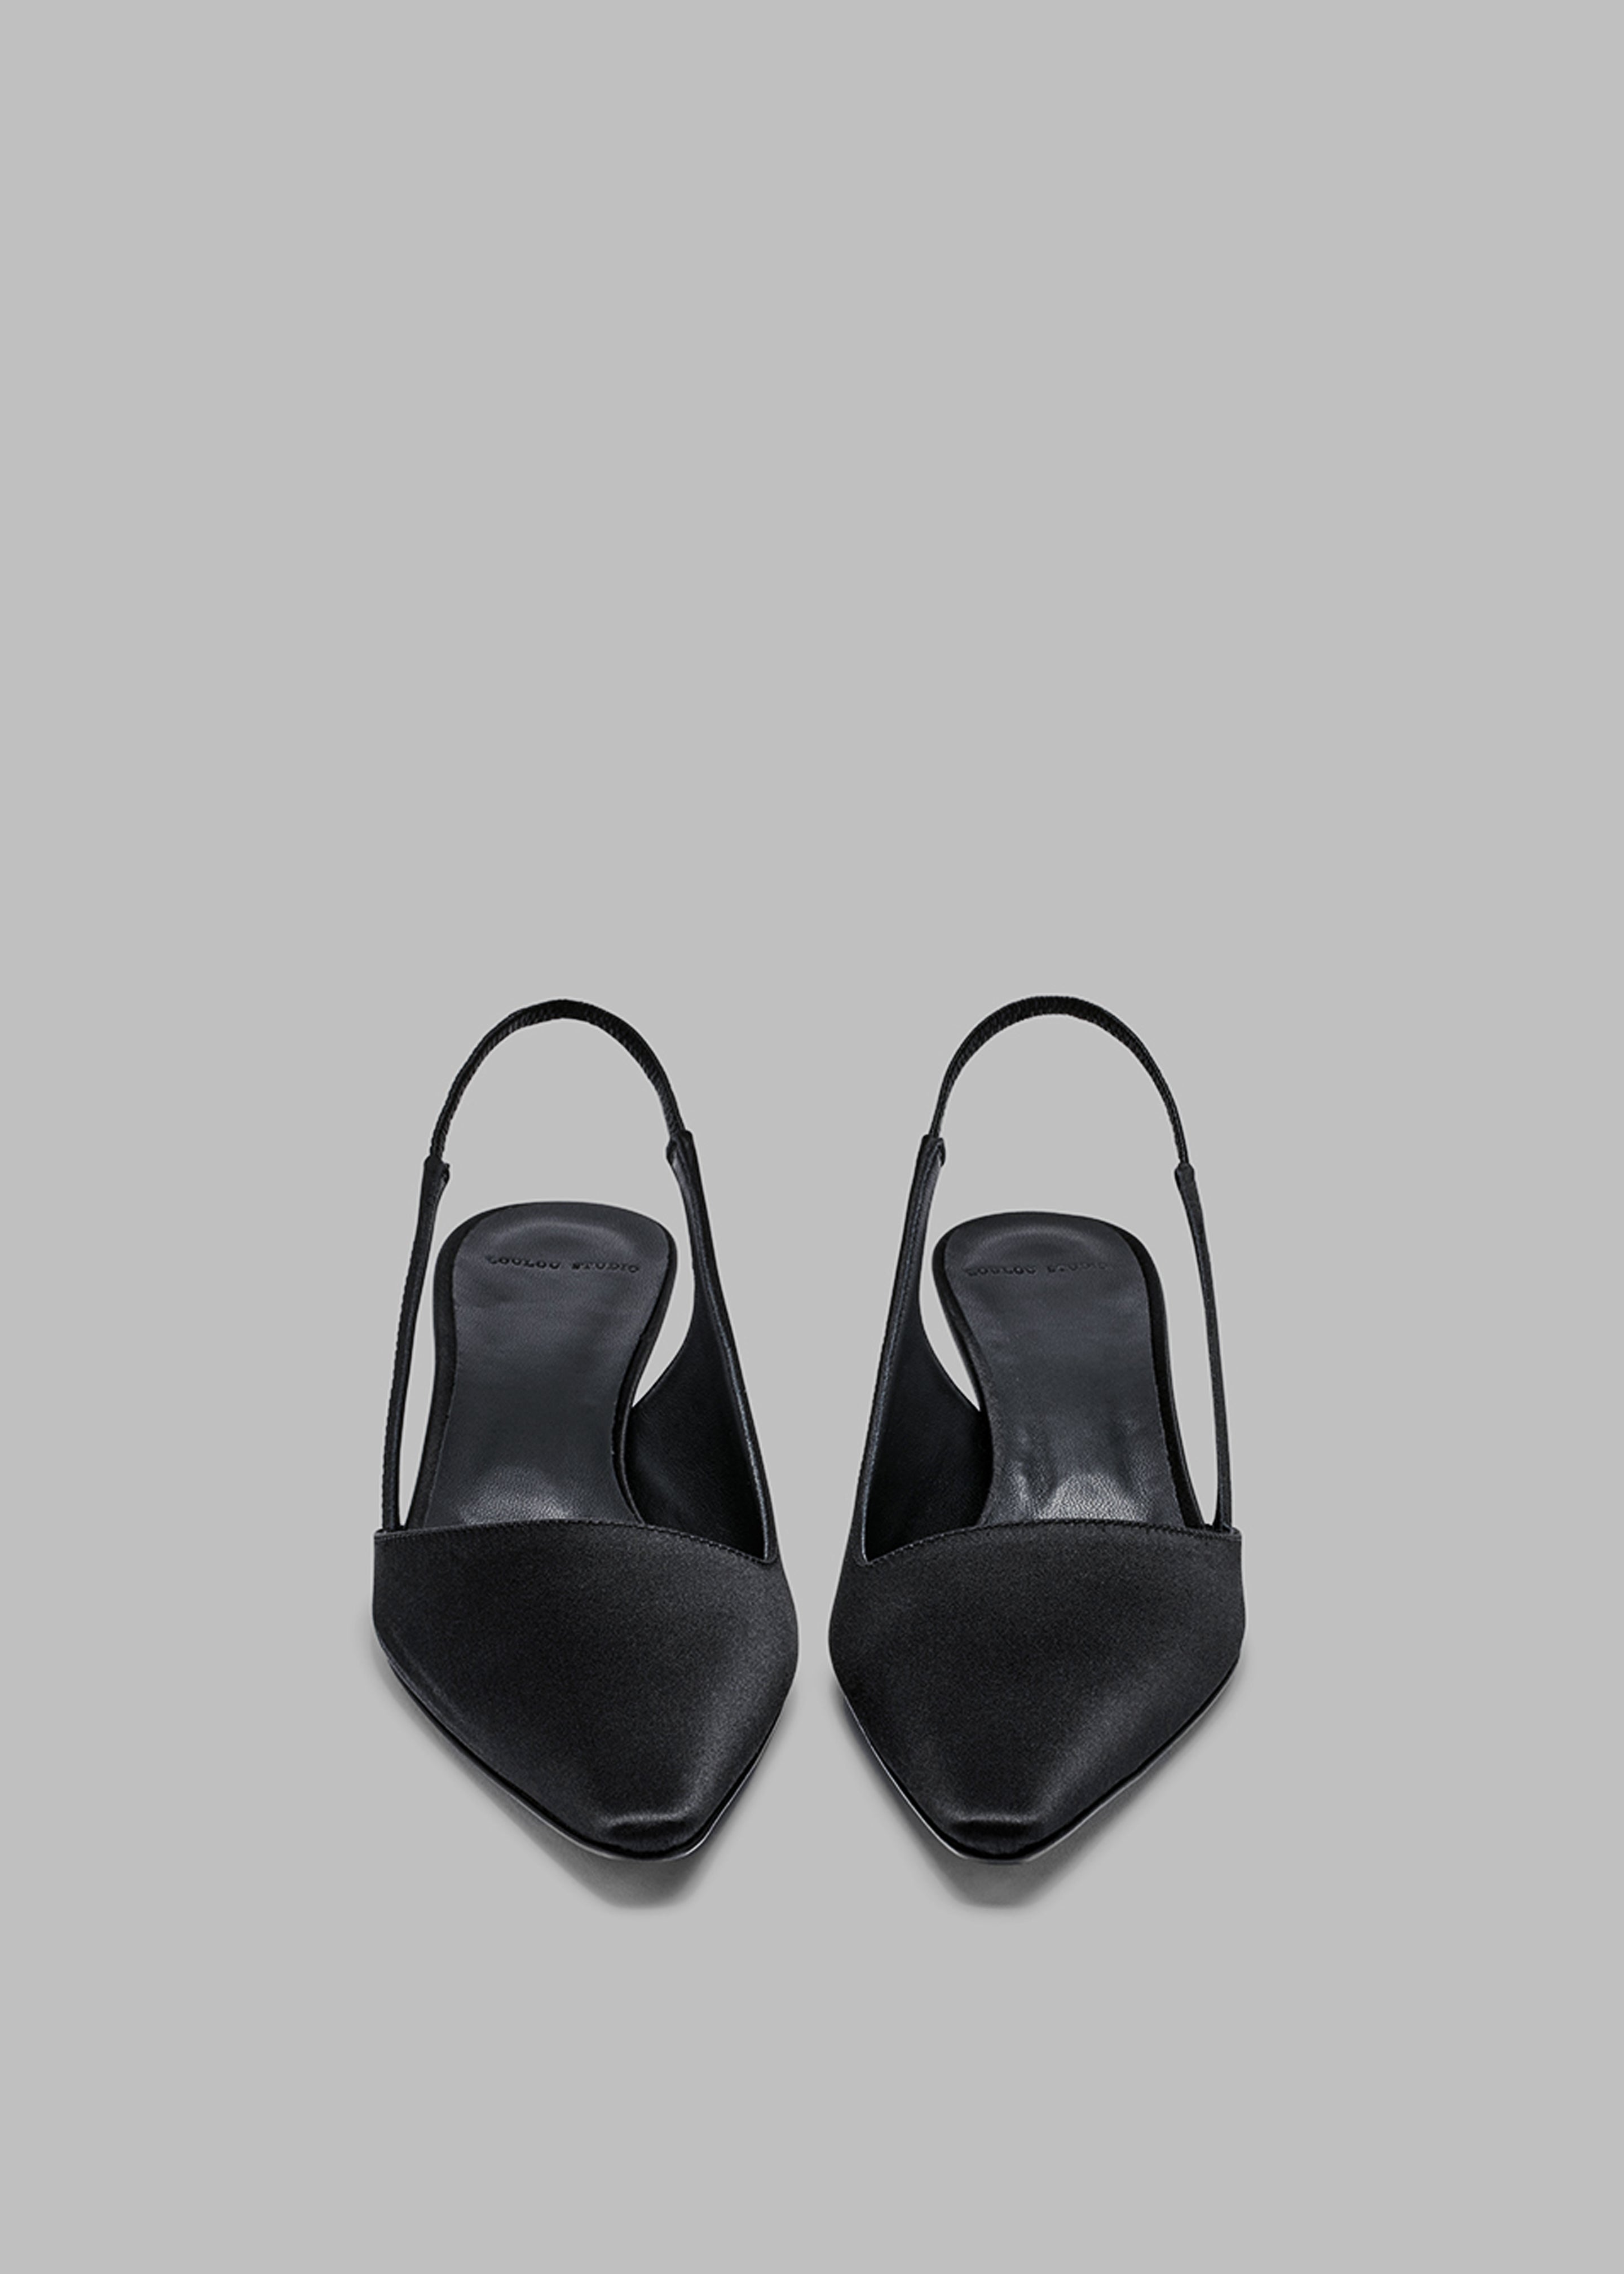 Loulou Studio Sulue Slingback Kitten Heel Shoes - Black - 2